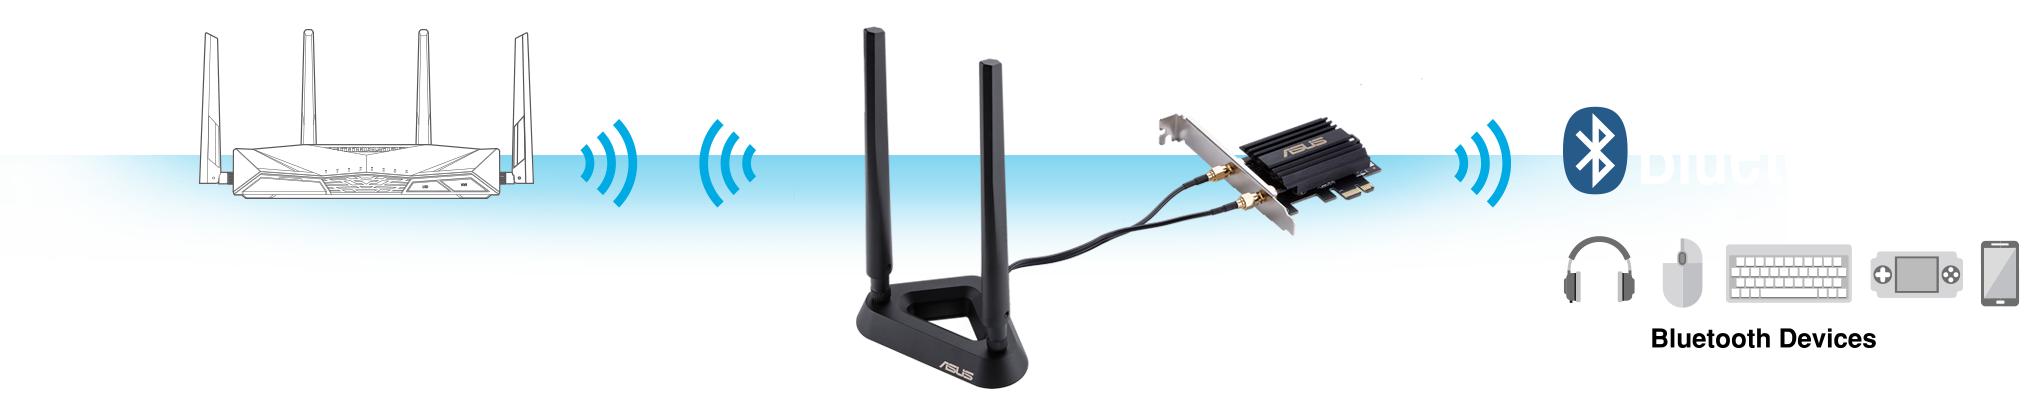 ASUS PEC-AX58BT ให้การอัพเกรดเป็นเทคโนโลยี Bluetooth 5.0 ล่าสุดทันที